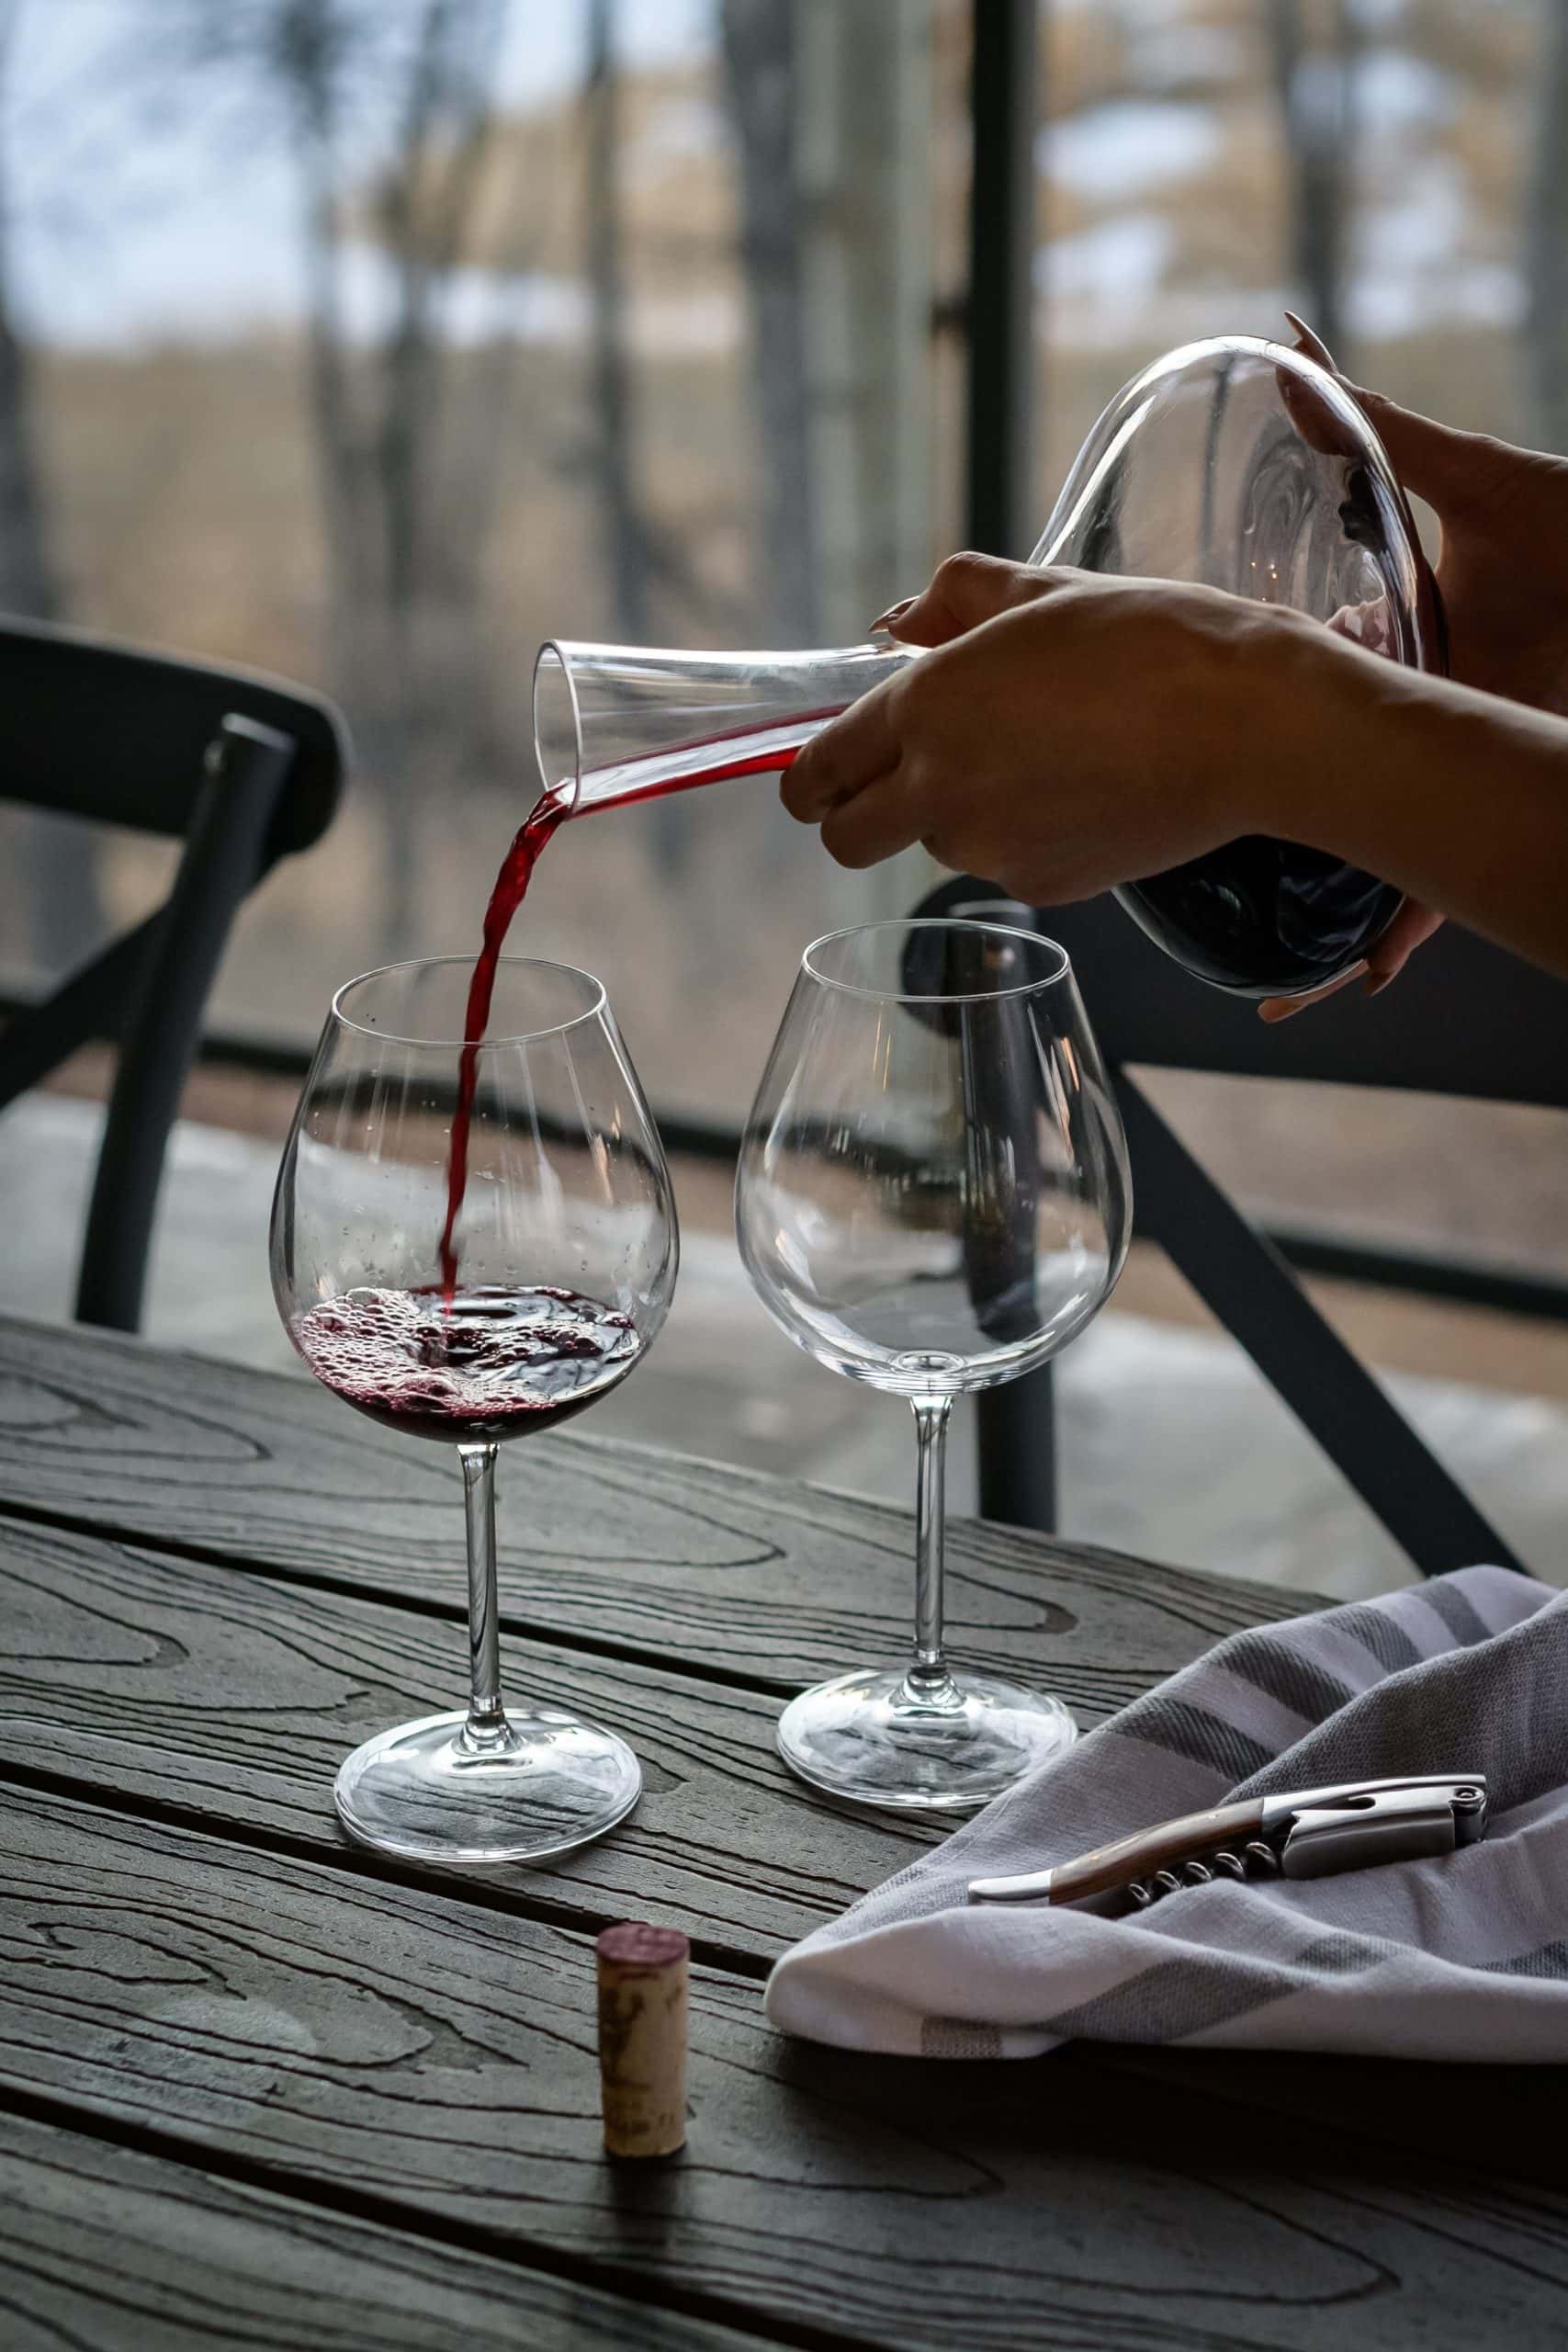 Microoxygenation: Understanding the influence of oxygen on Pinot Noir wine